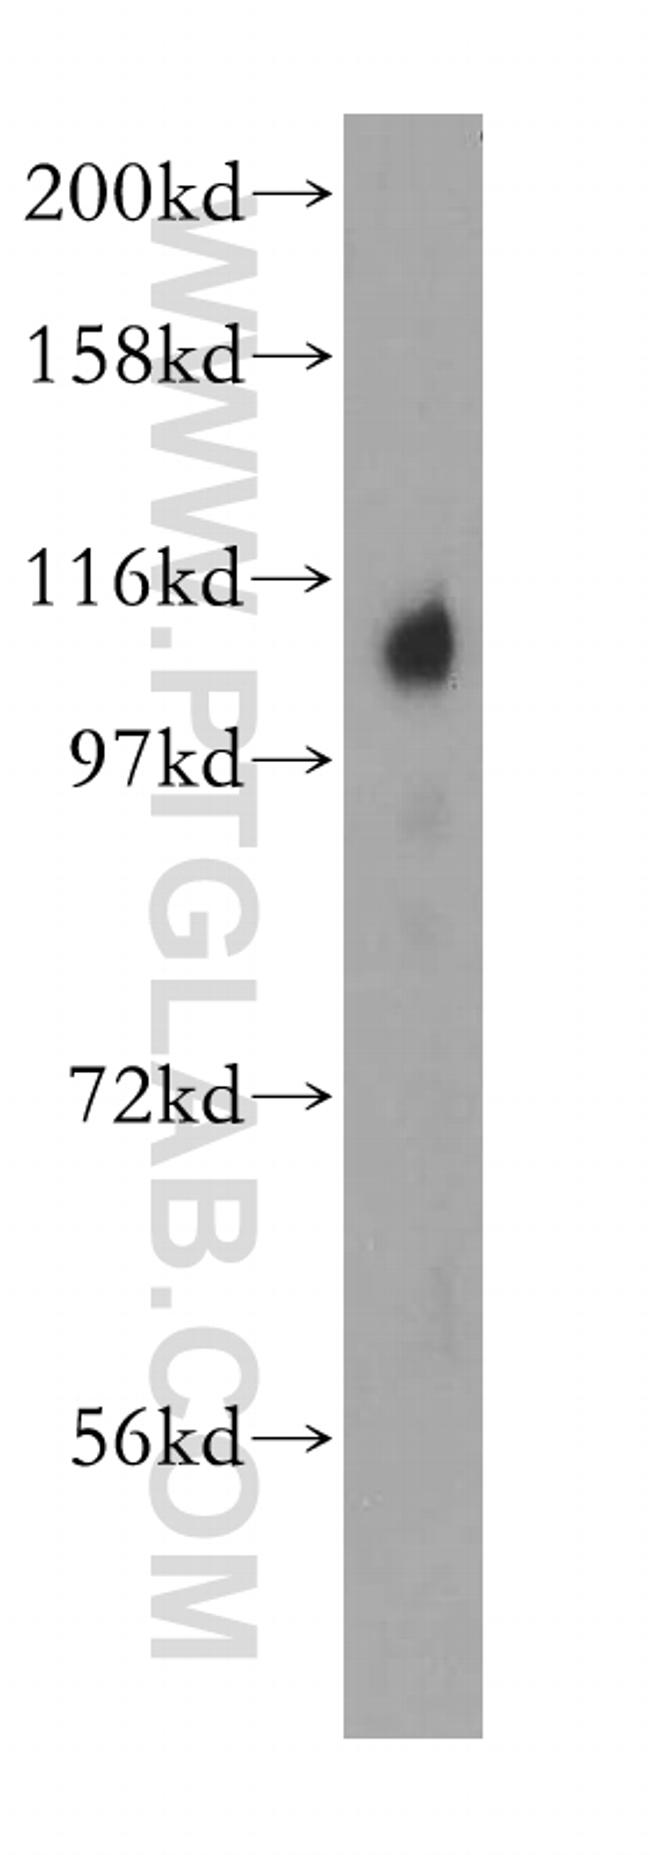 TRAK2 Antibody in Western Blot (WB)